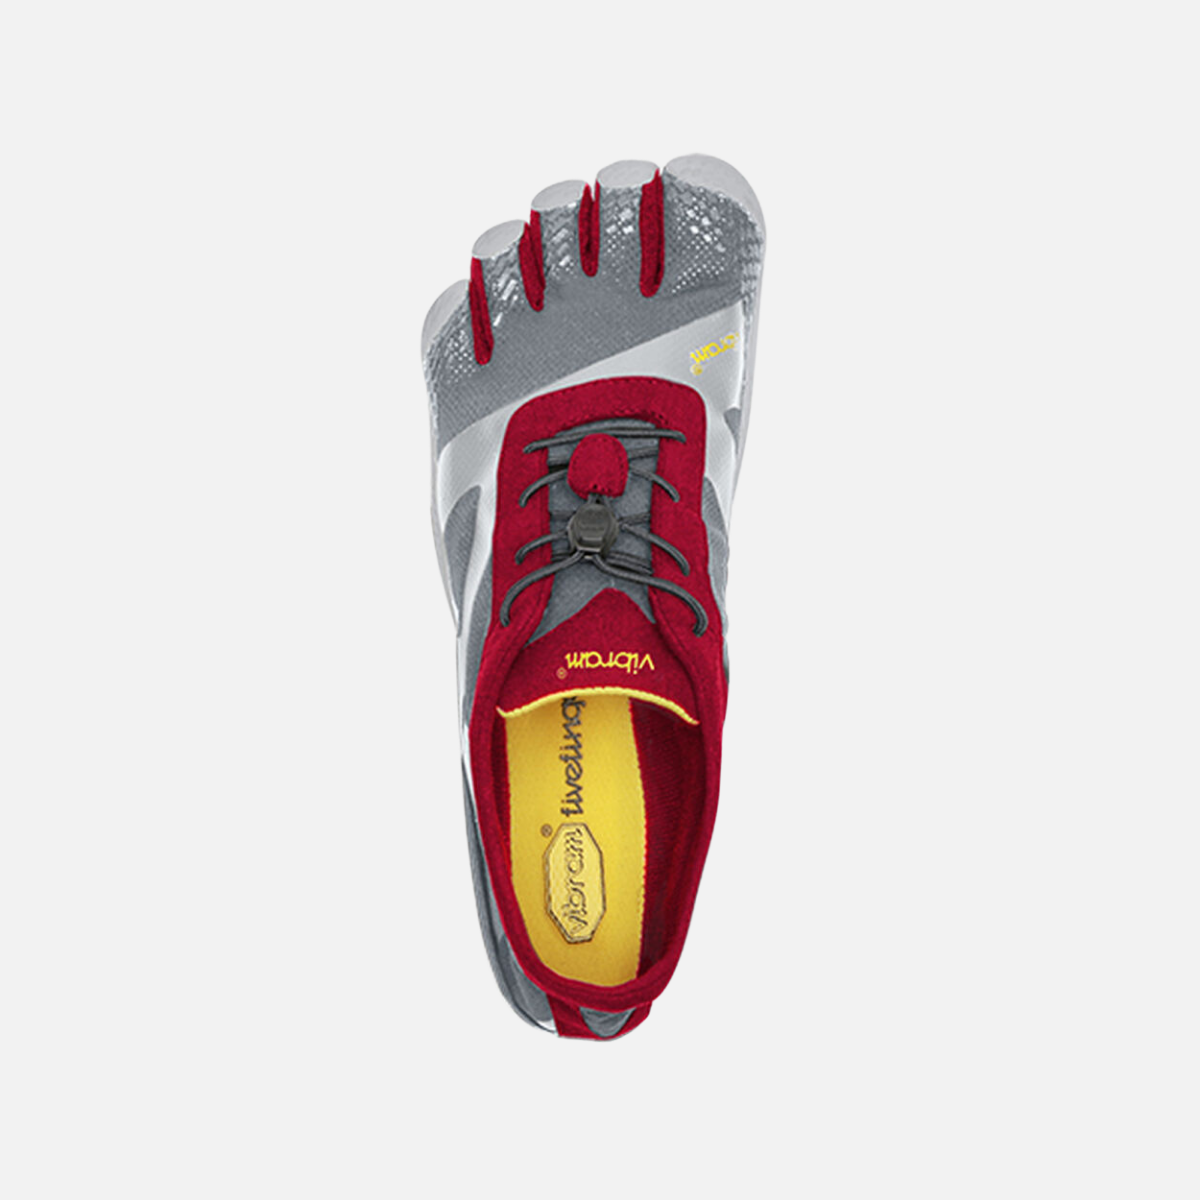 Vibram Kso Evo Mens Barefoot Training Footwear (Grey-Red)